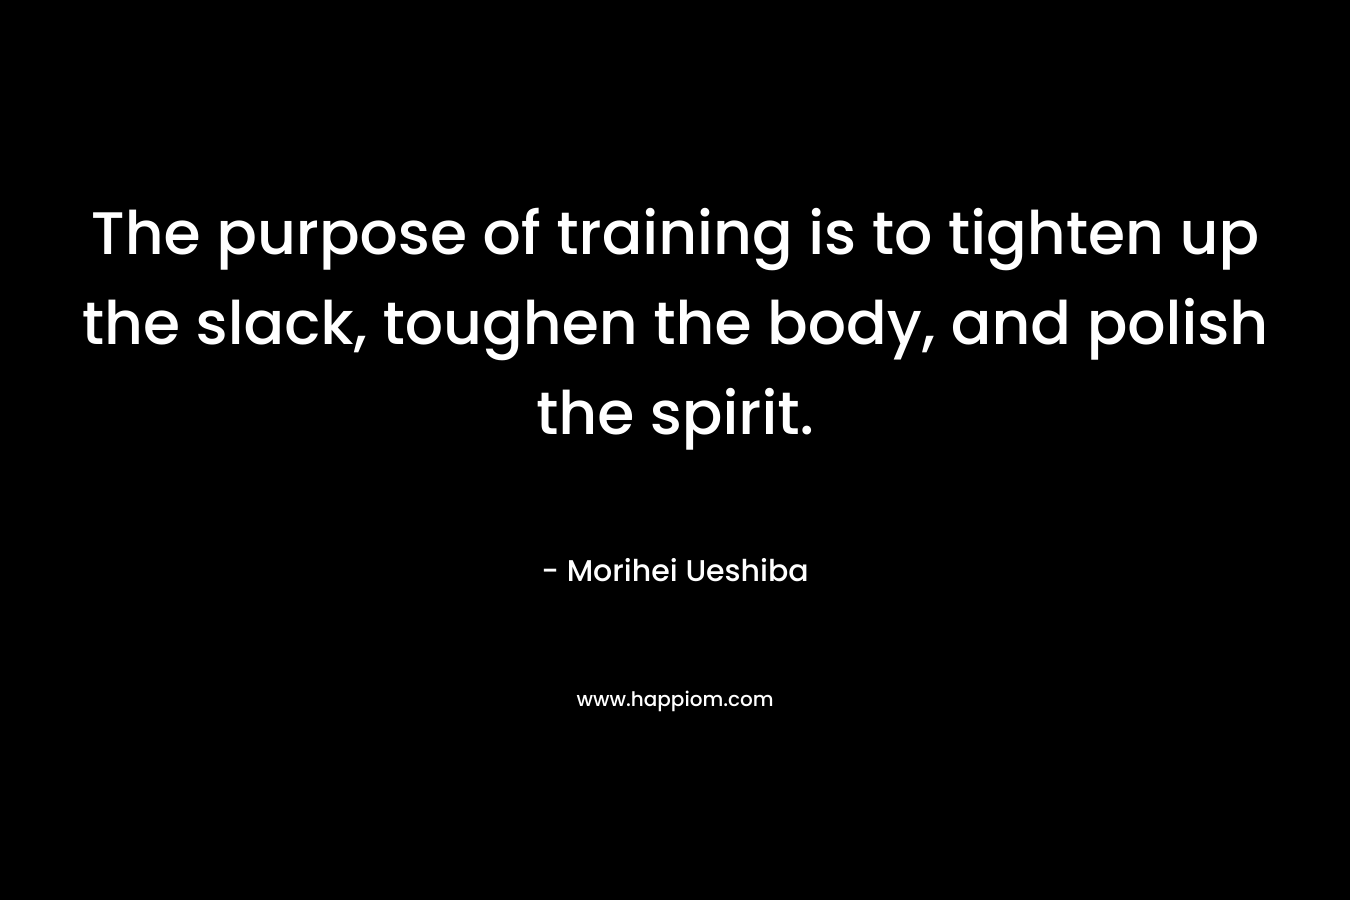 The purpose of training is to tighten up the slack, toughen the body, and polish the spirit. – Morihei Ueshiba